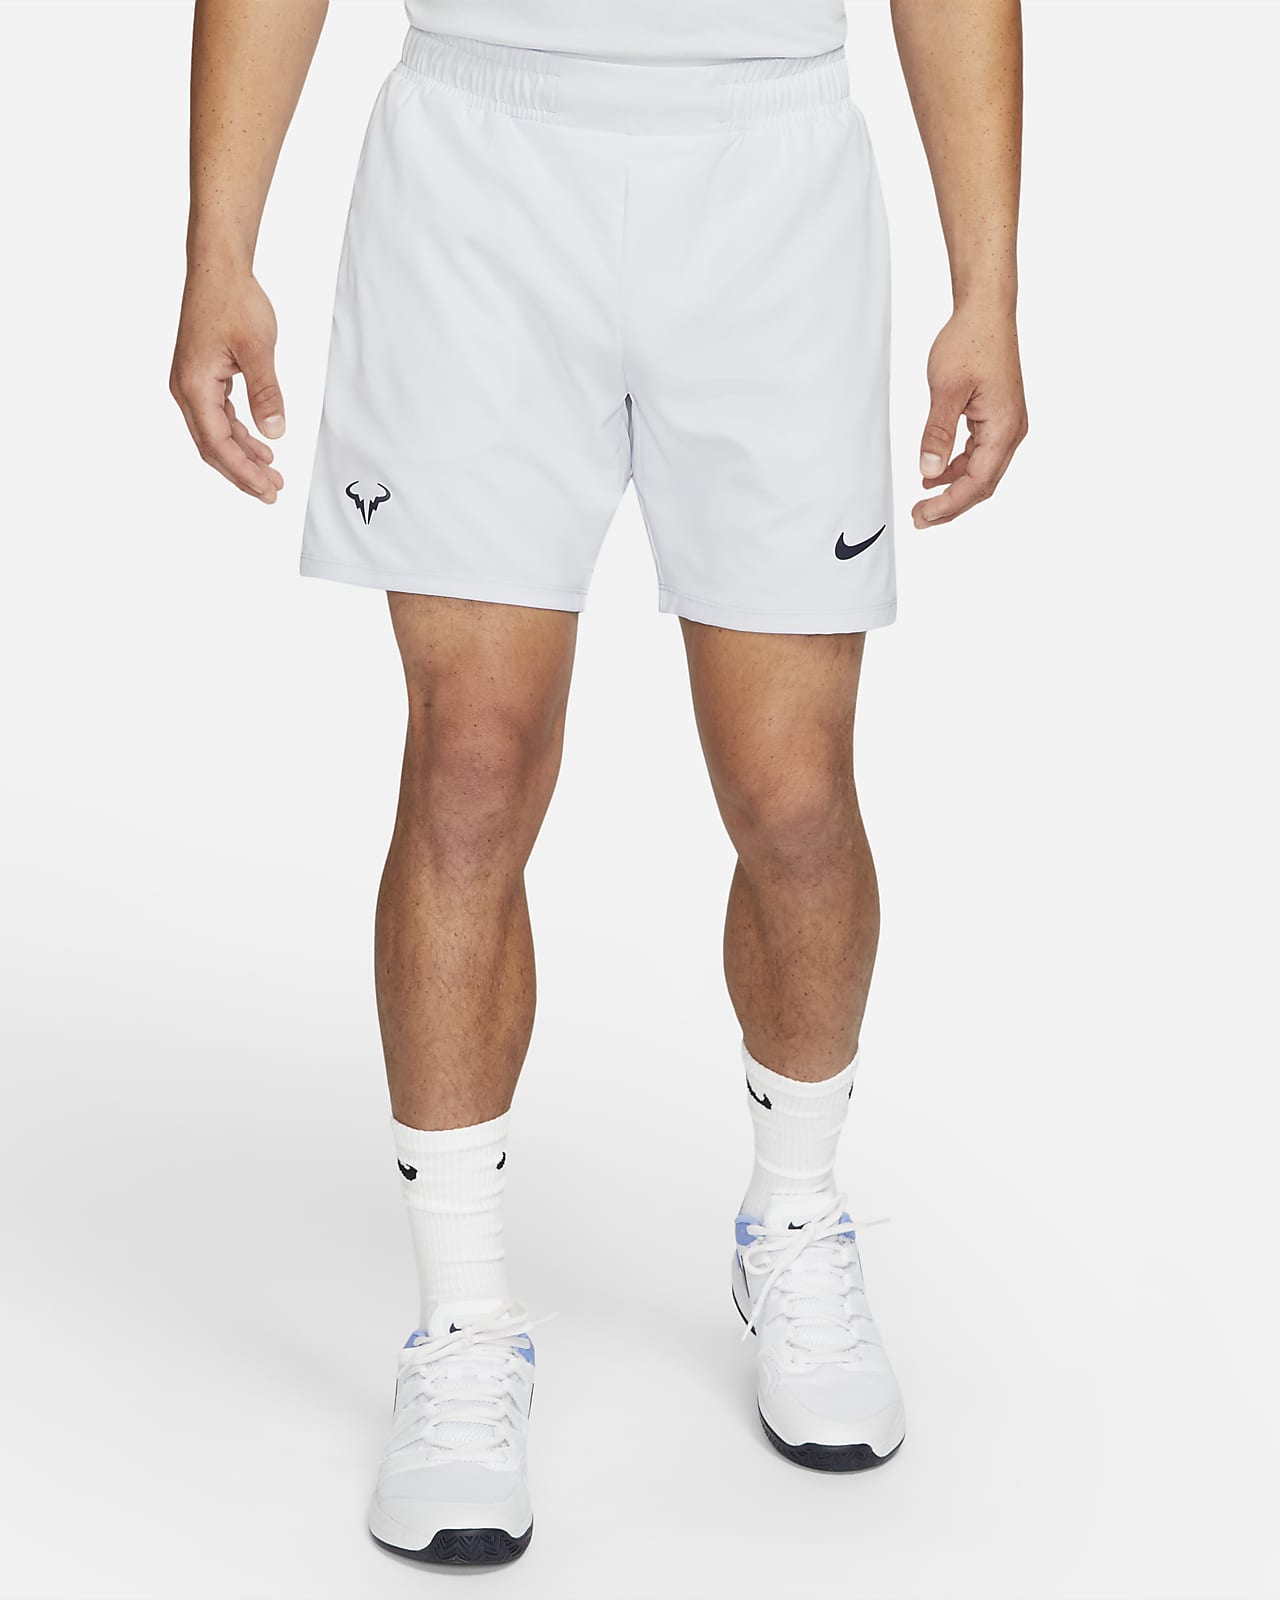 rafa tennis clothes